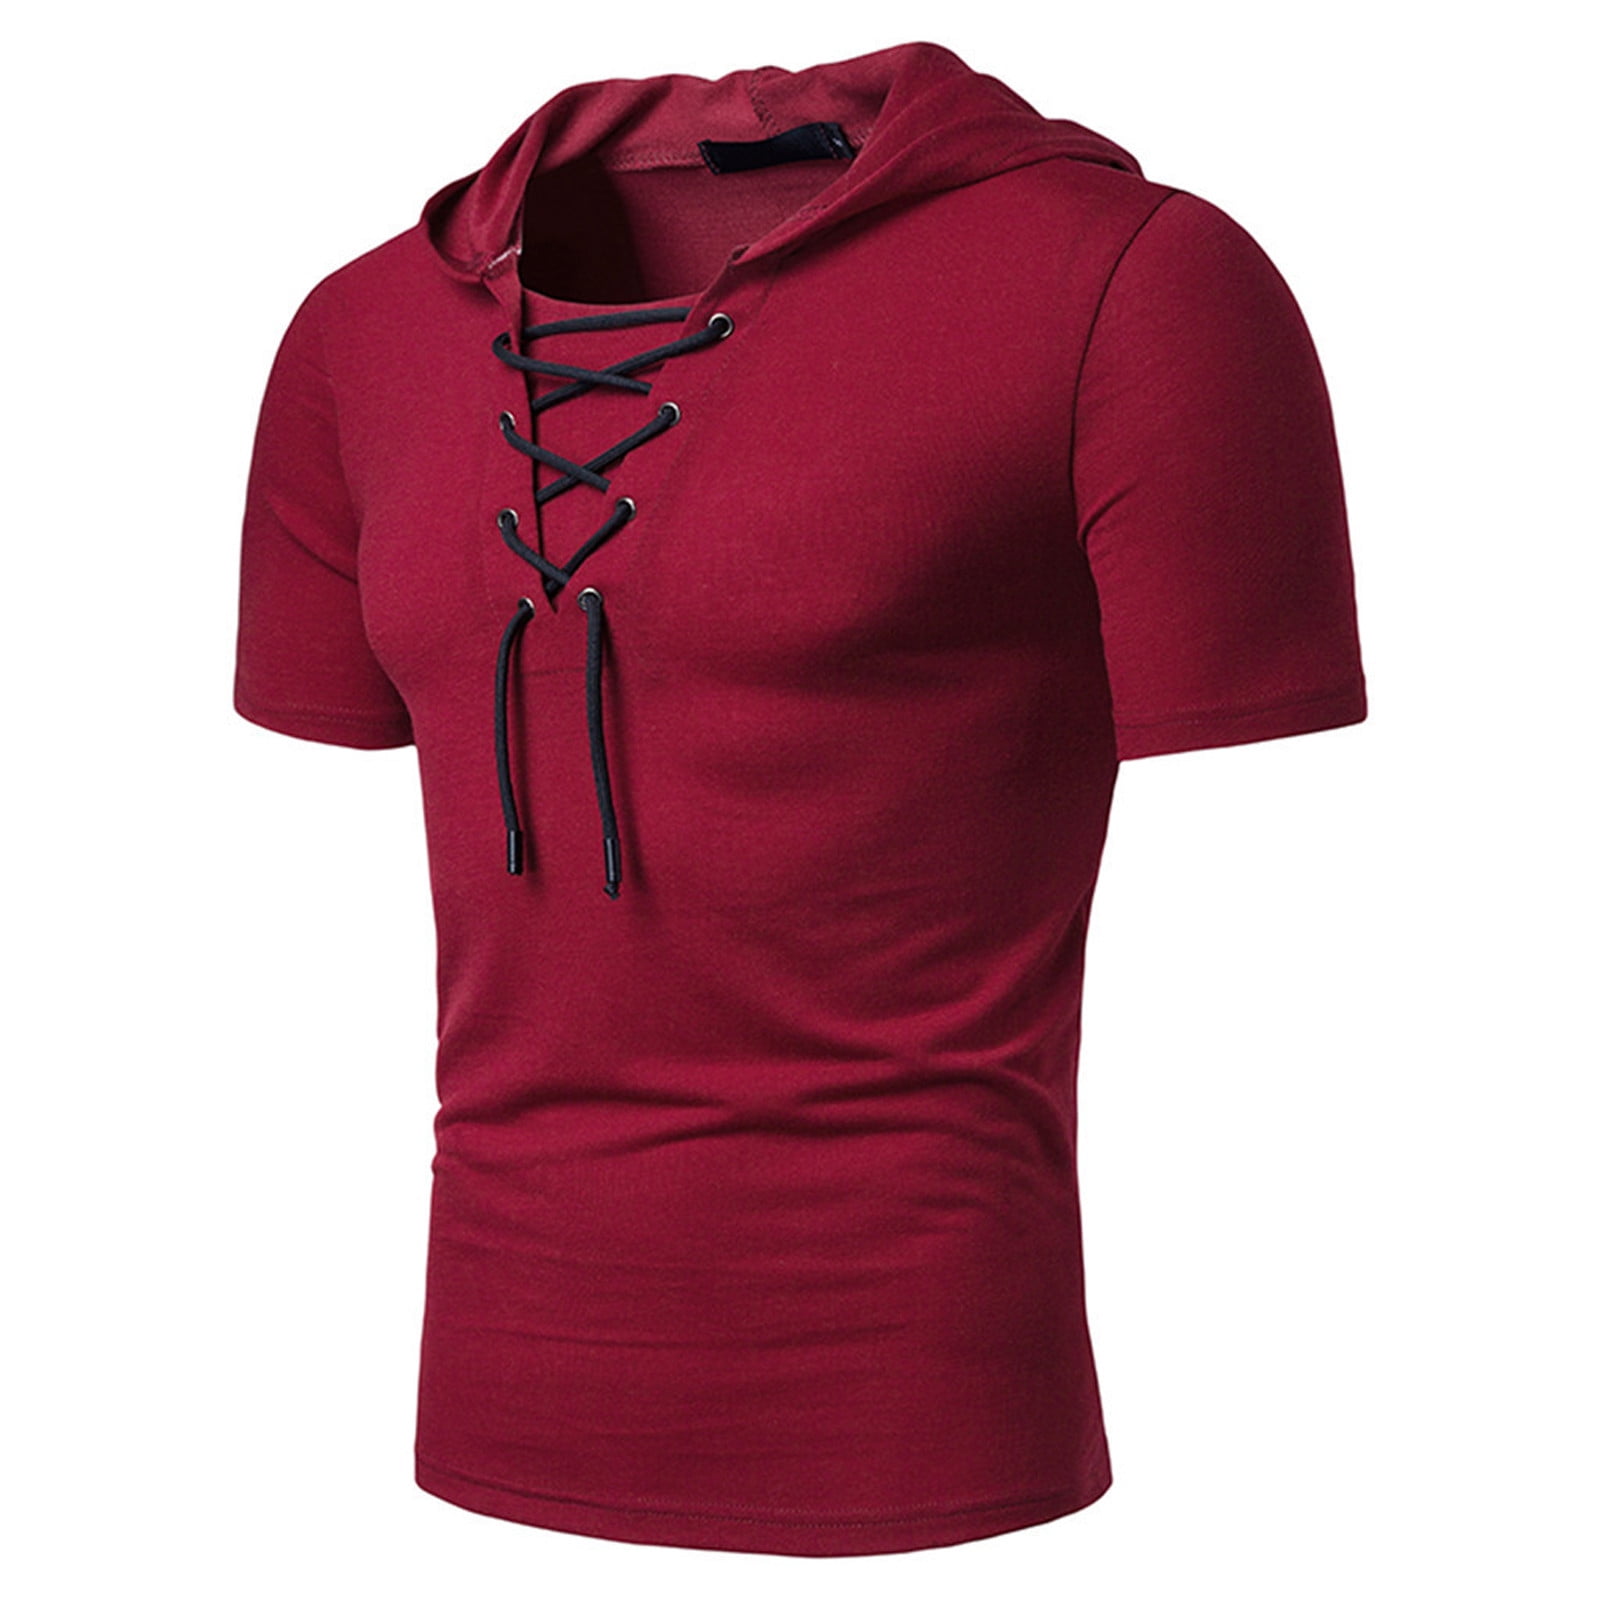 HSMQHJWE Red Shirts For Men Dress Shirt Neck Men Shirt Short Sleeve ...